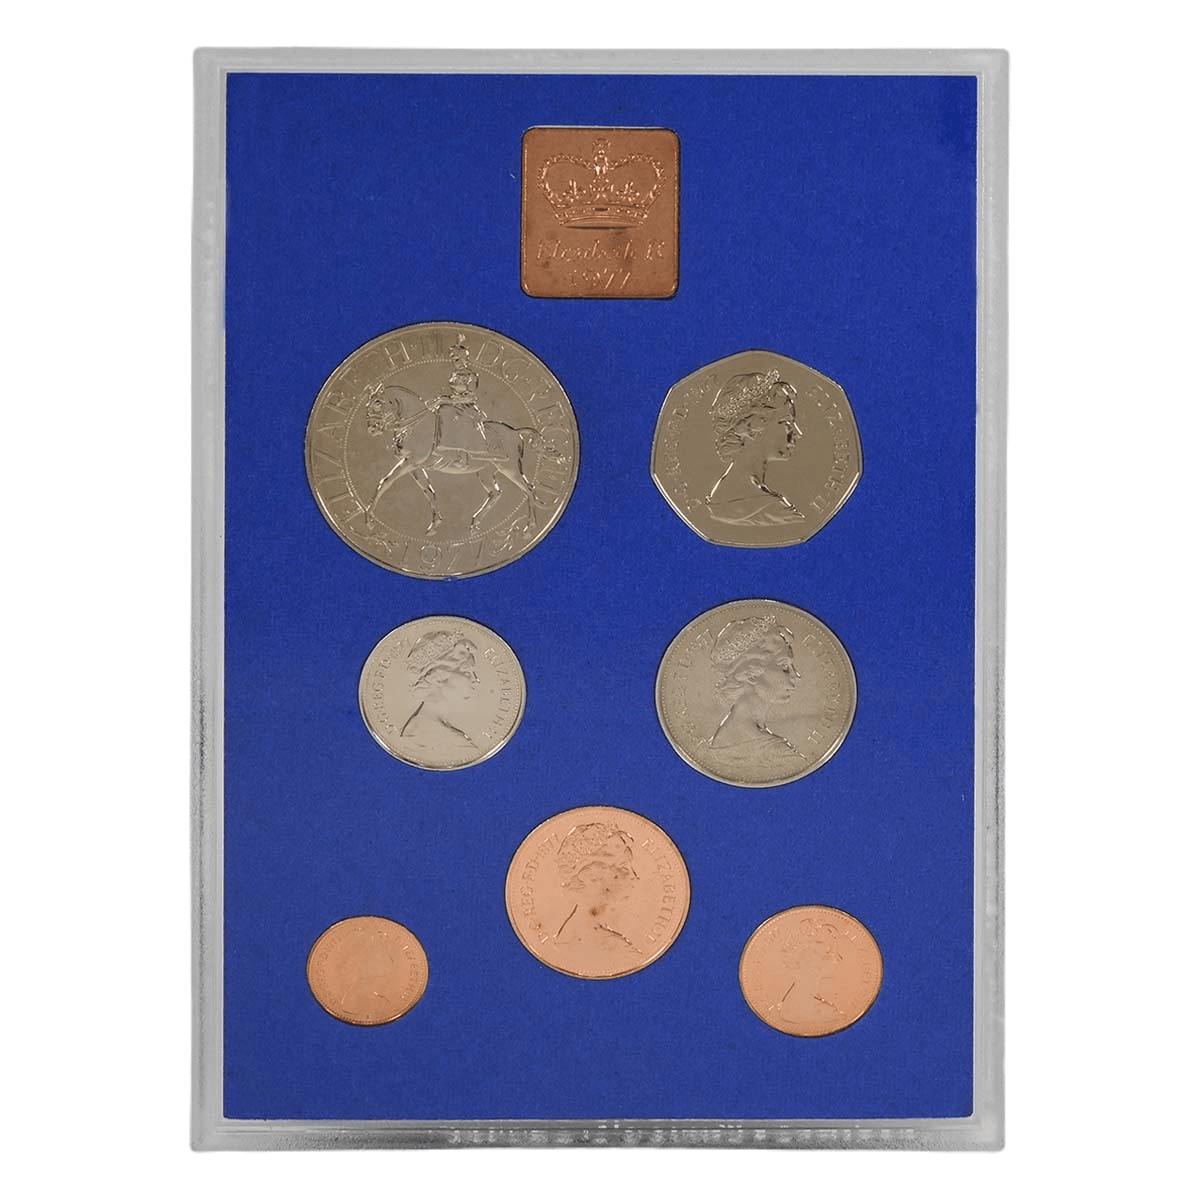 1977 UK Proof Annual 7 Coin Set - Silver Jubilee of Queen Elizabeth II - Loose Change Coins